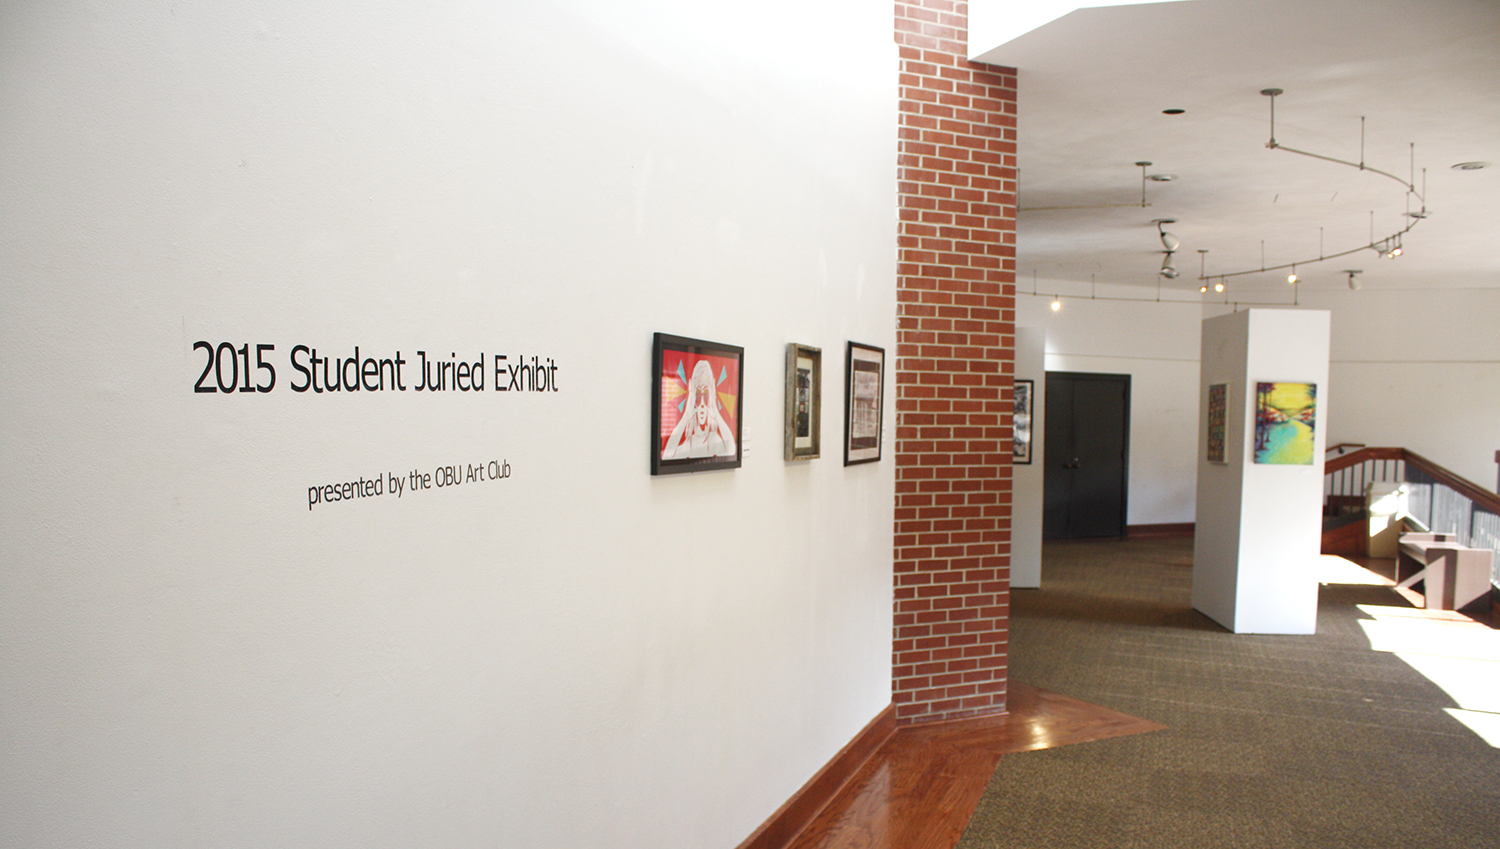 Student Juried Art Exhibit on display at Ouachita through Feb. 26.